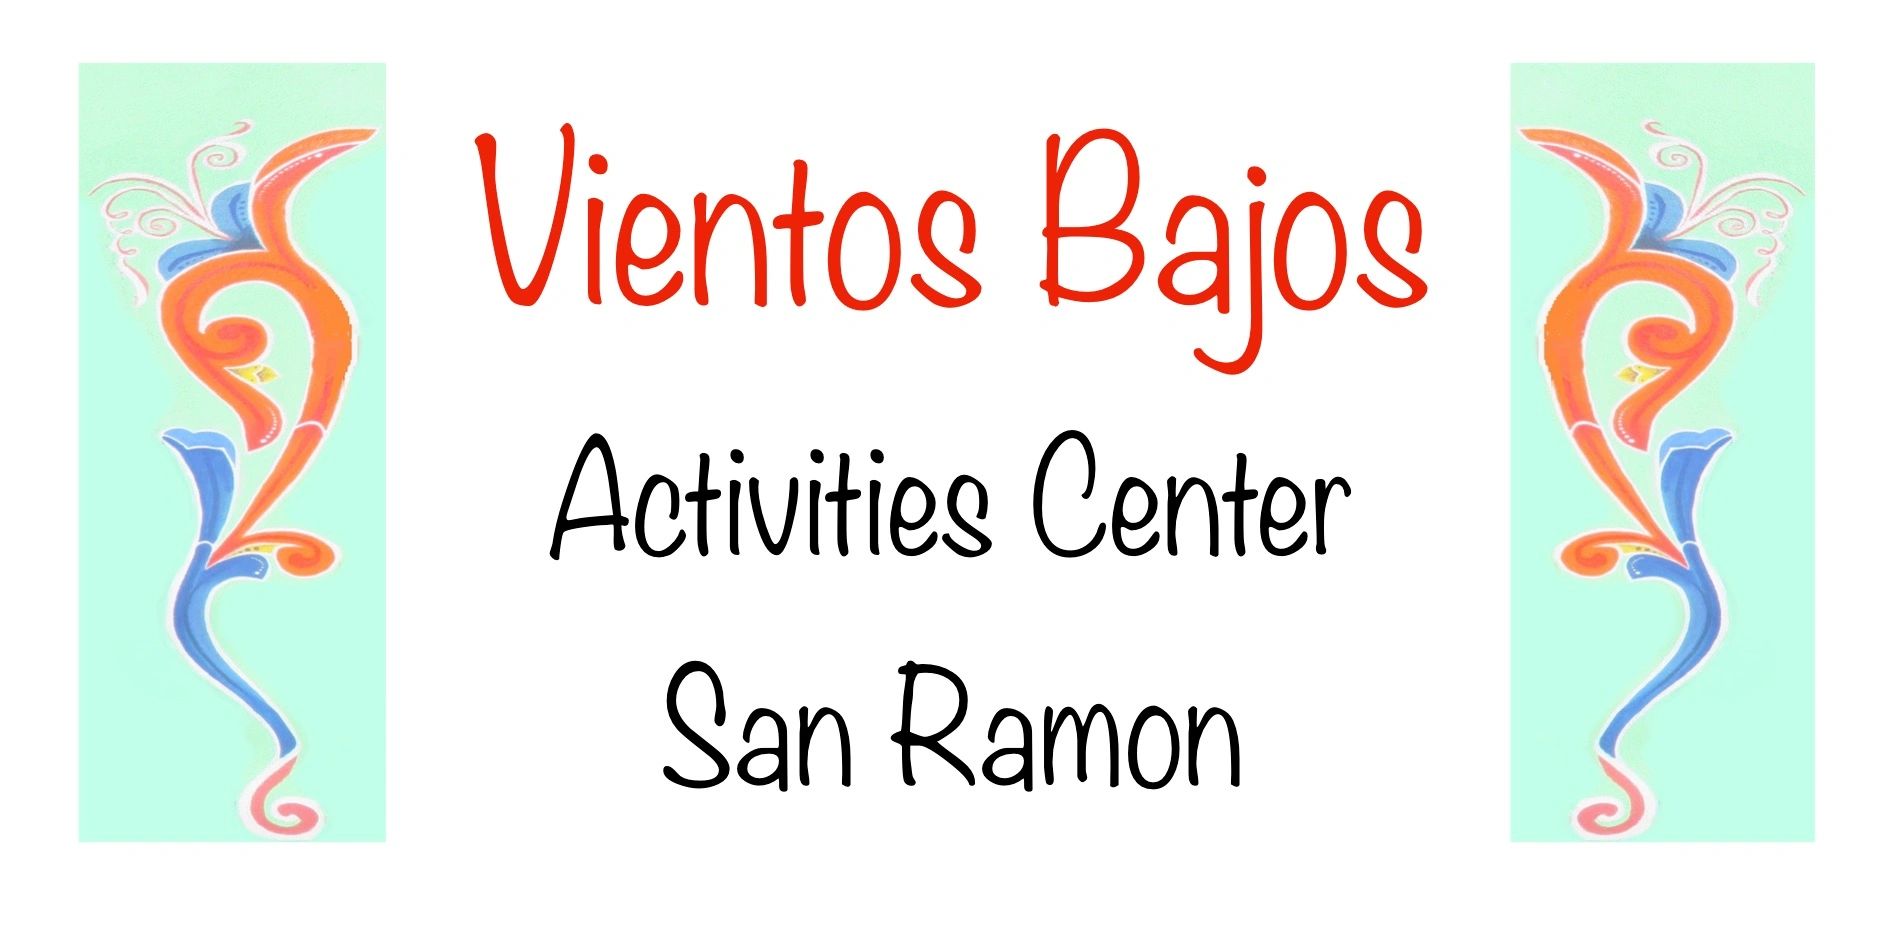 Logo for Vientos Bajos Activities Center, San Ramon, Costa Rica